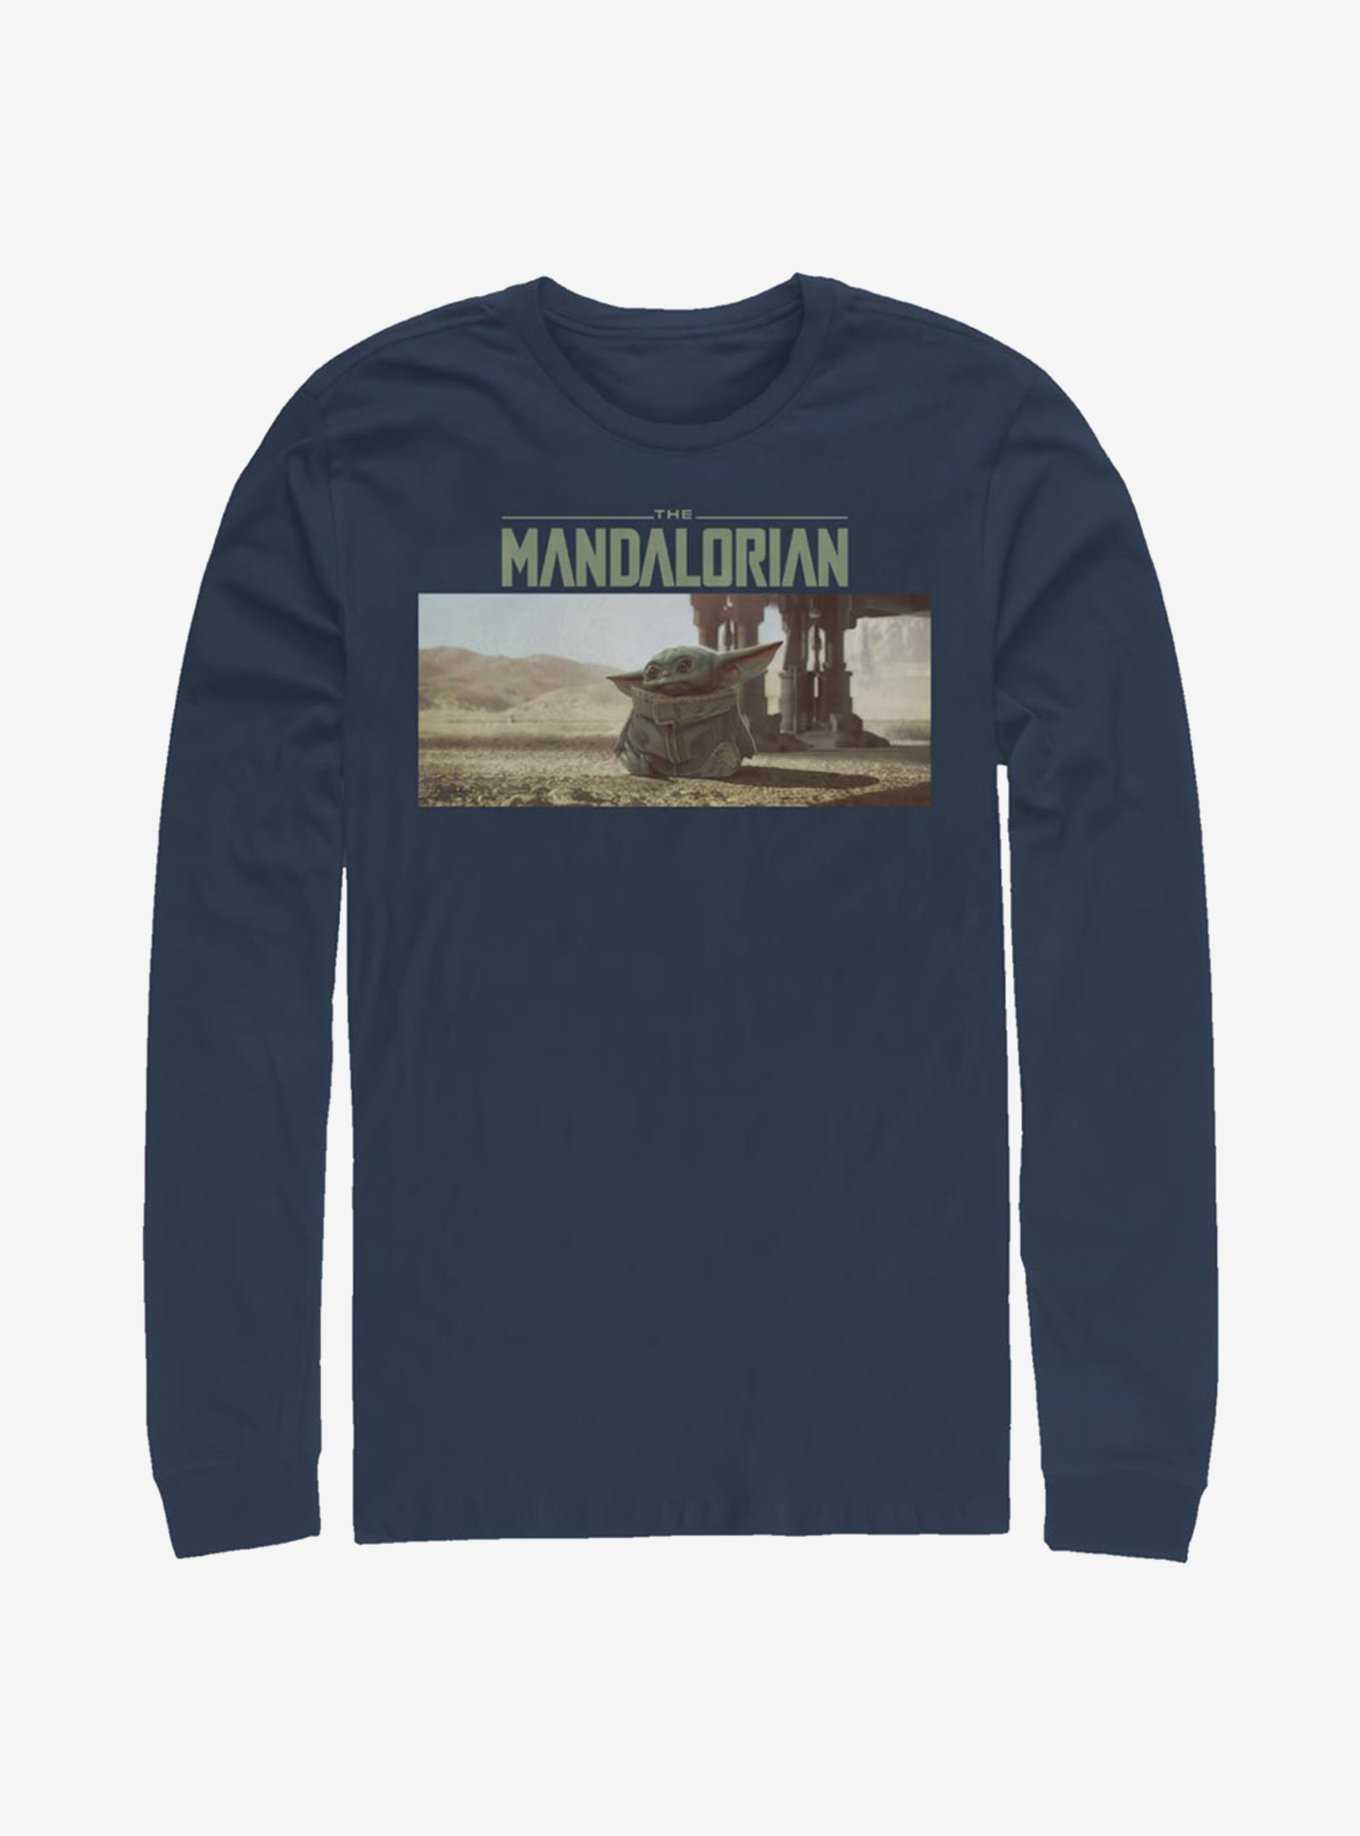 Star Wars The Mandalorian The Child Still Looking Long-Sleeve T-Shirt, , hi-res